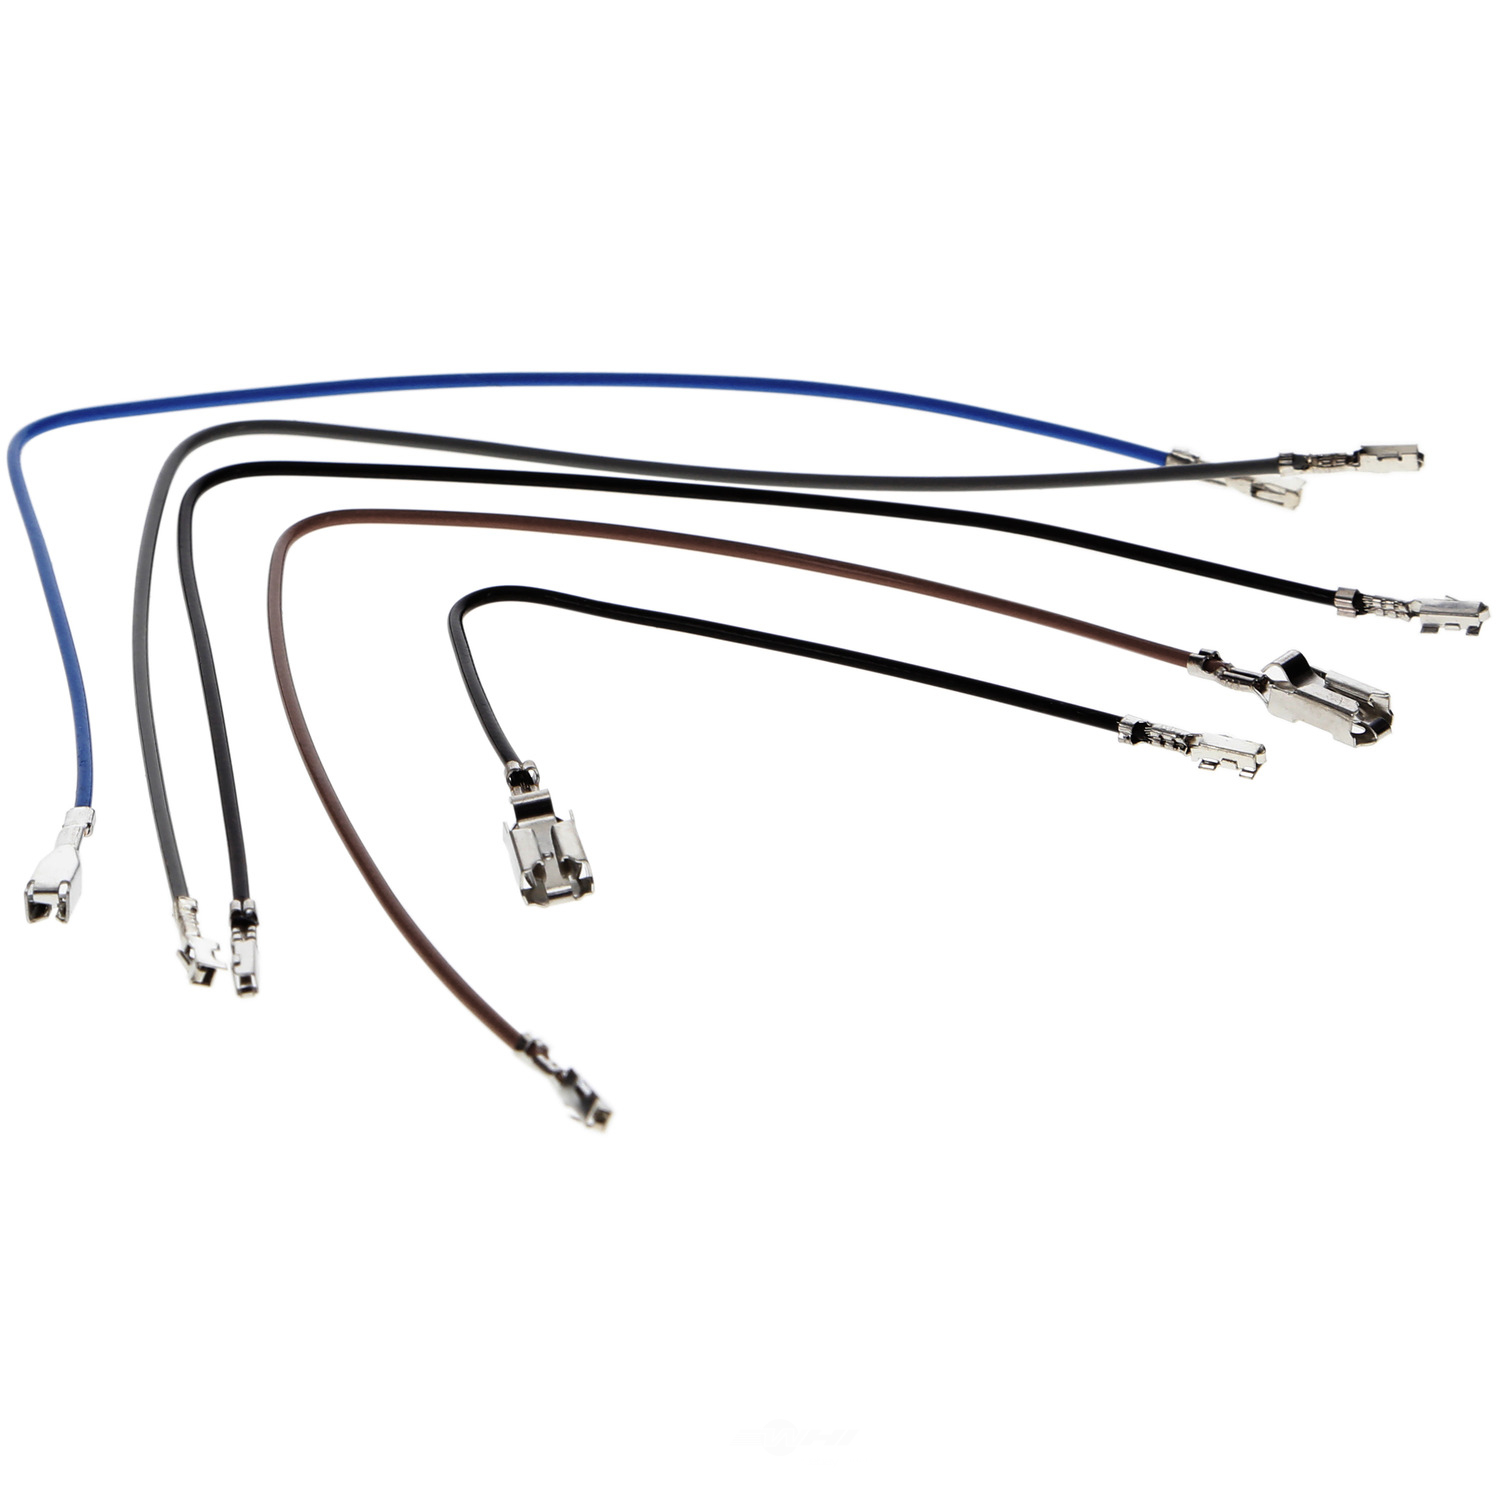 CARTER - Fuel Pump Wiring Harness - CTR 888-536